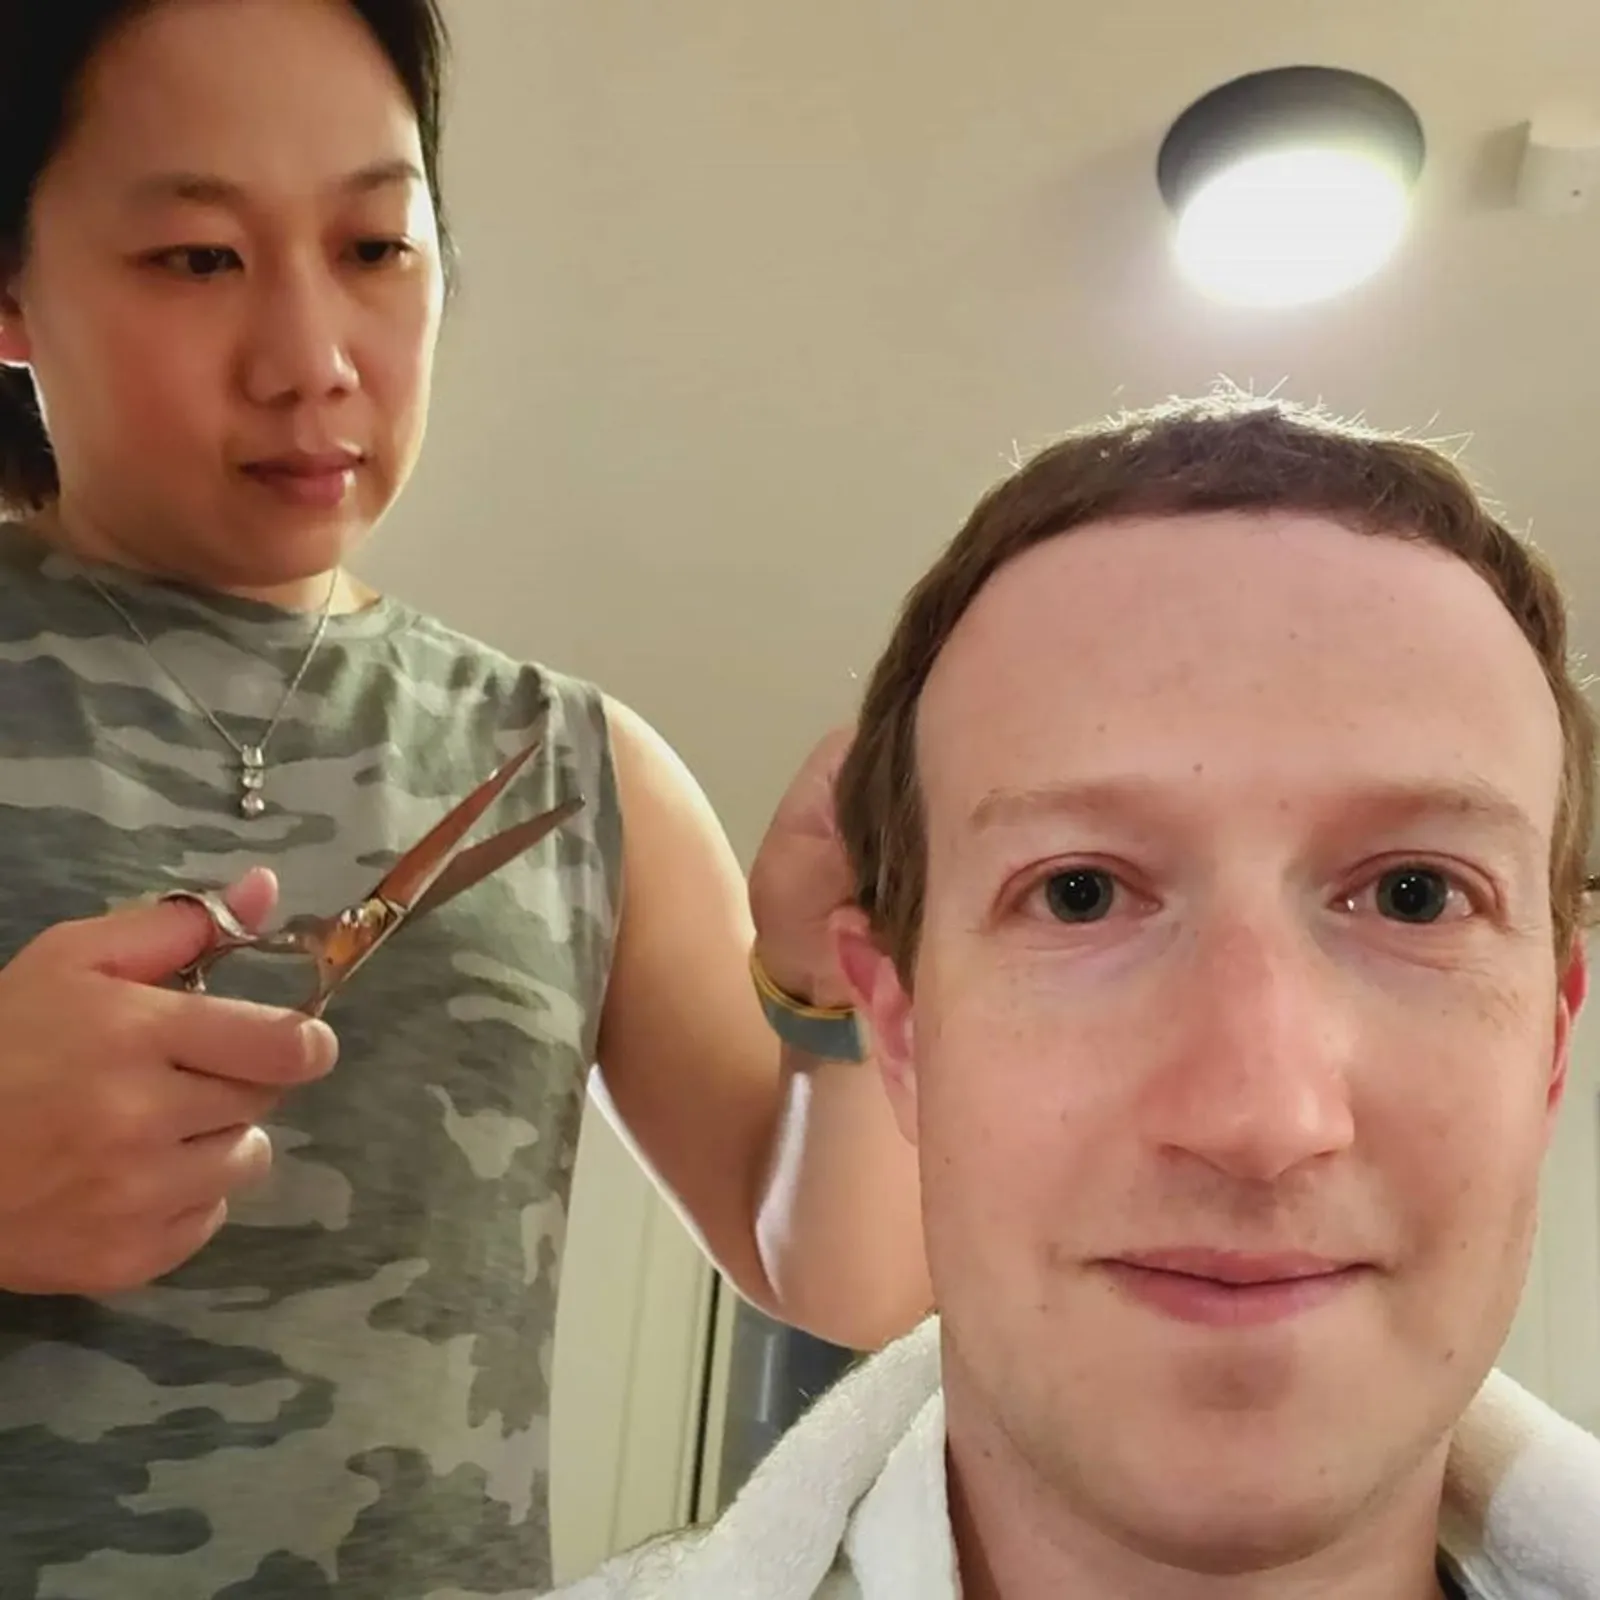 Kaya Raya Tapi Sederhana, 10 Potret Mark Zuckerberg & Priscilla Chan